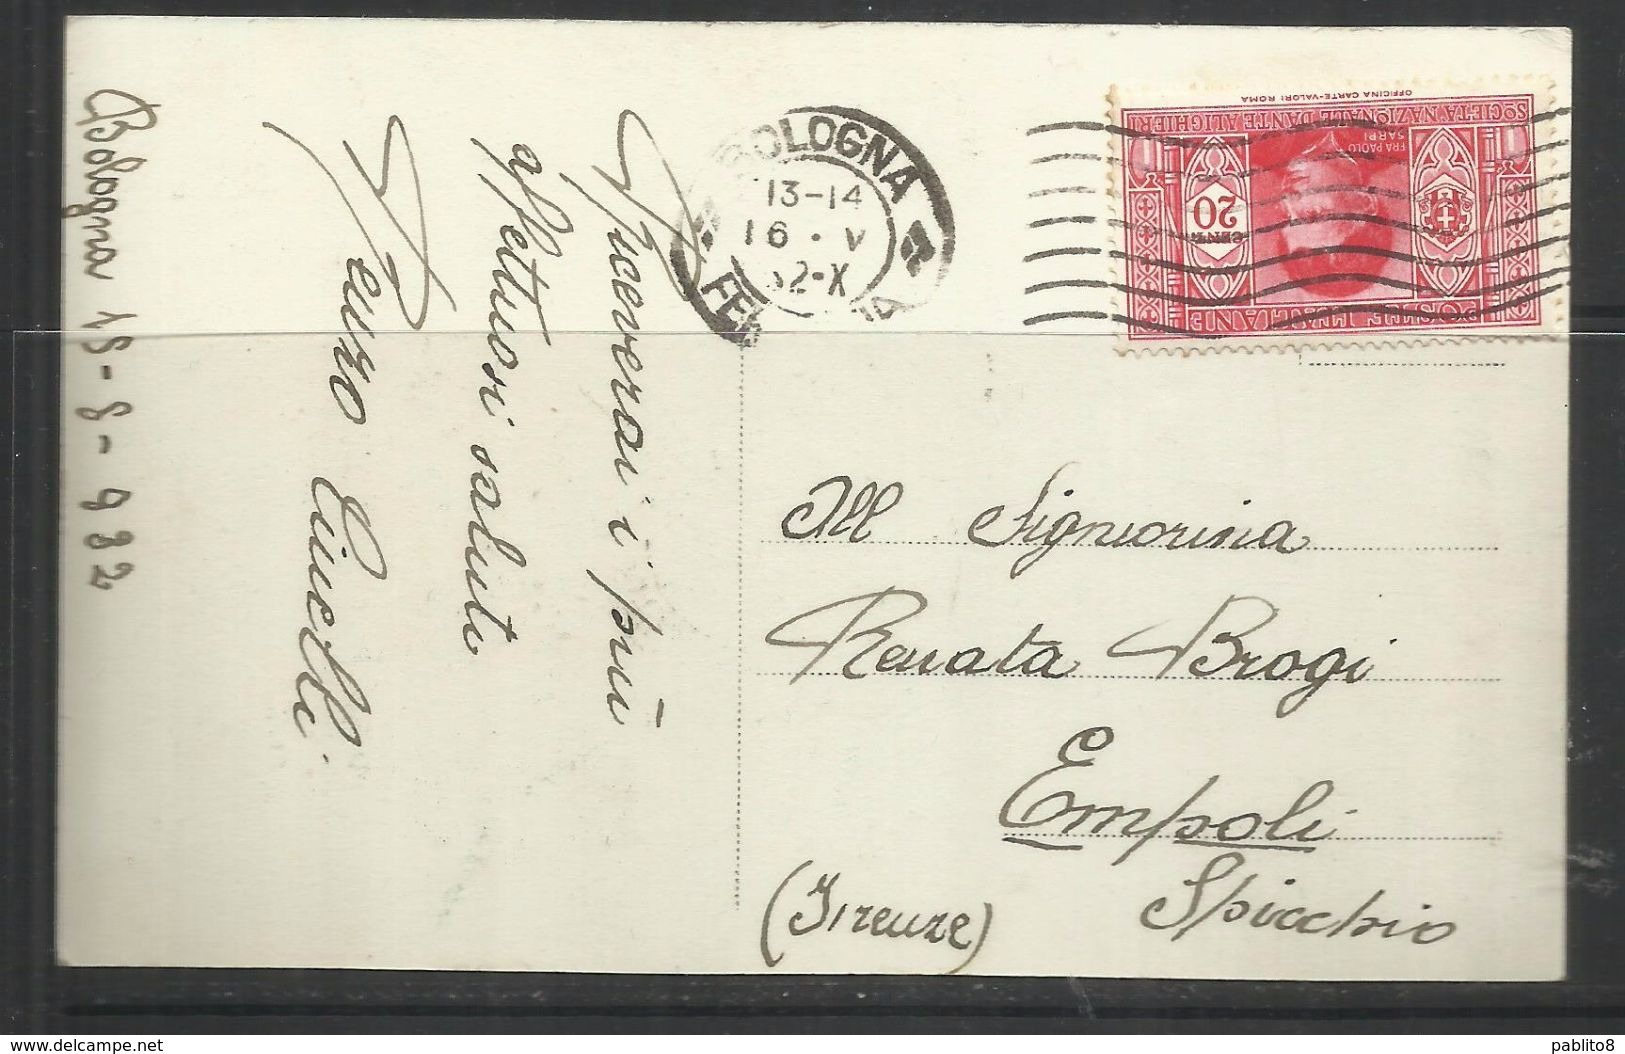 ITALIA REGNO ITALY KINGDOM 16 5 1932 SERIE ROMANTICA CENT 20 SOCIETA' DANTE ALIGHIERI CARTOLINA POST CARD - Fotografie